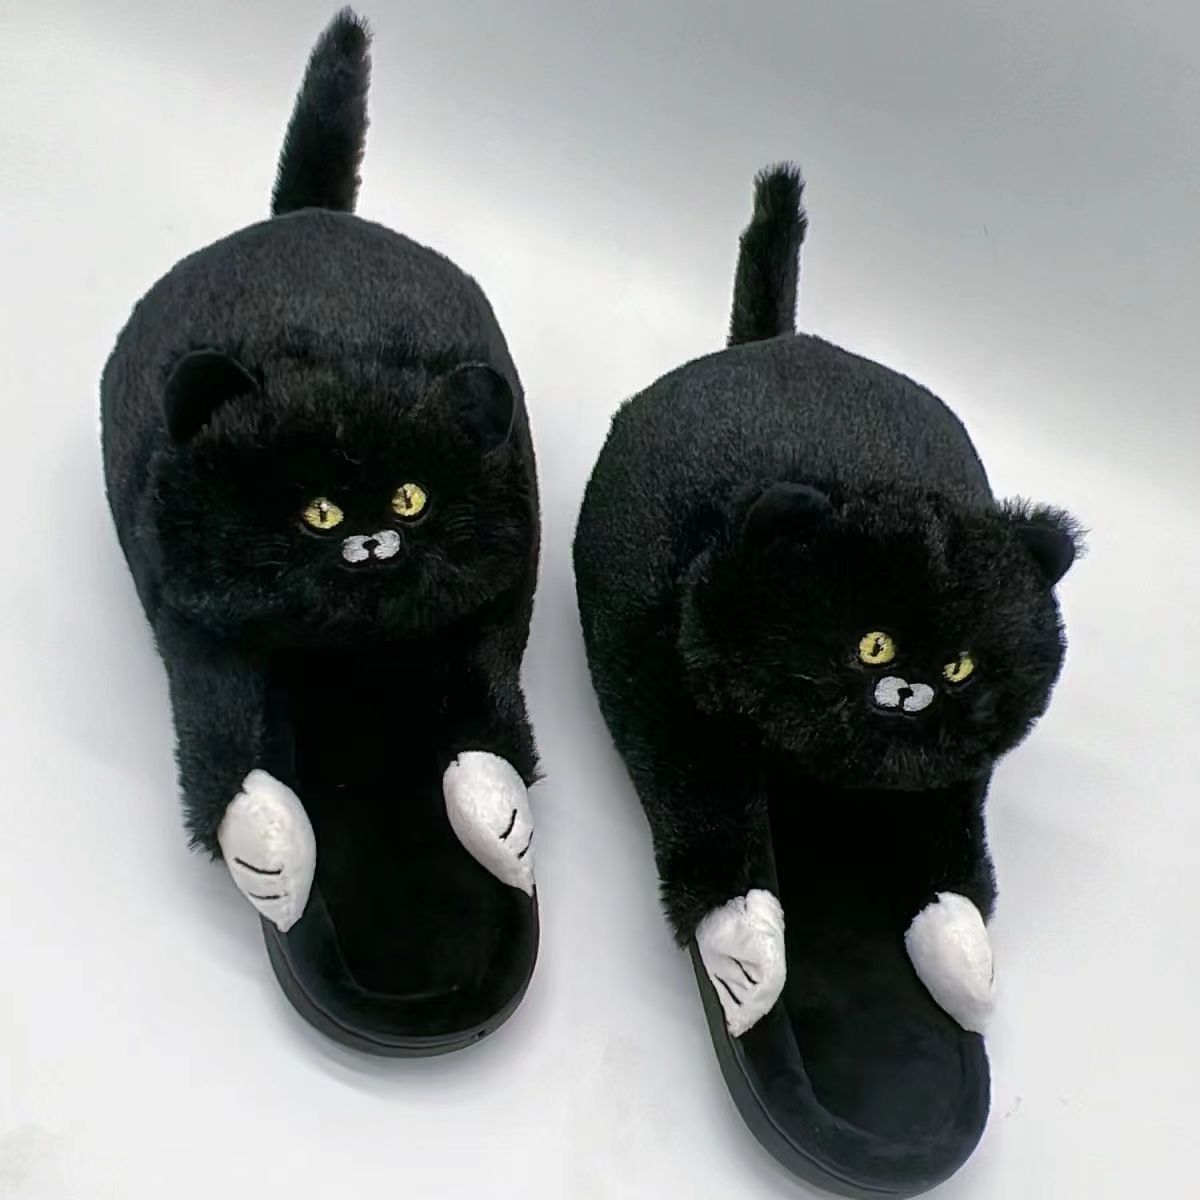 Cute Cat Hug Plush Cotton Slippers